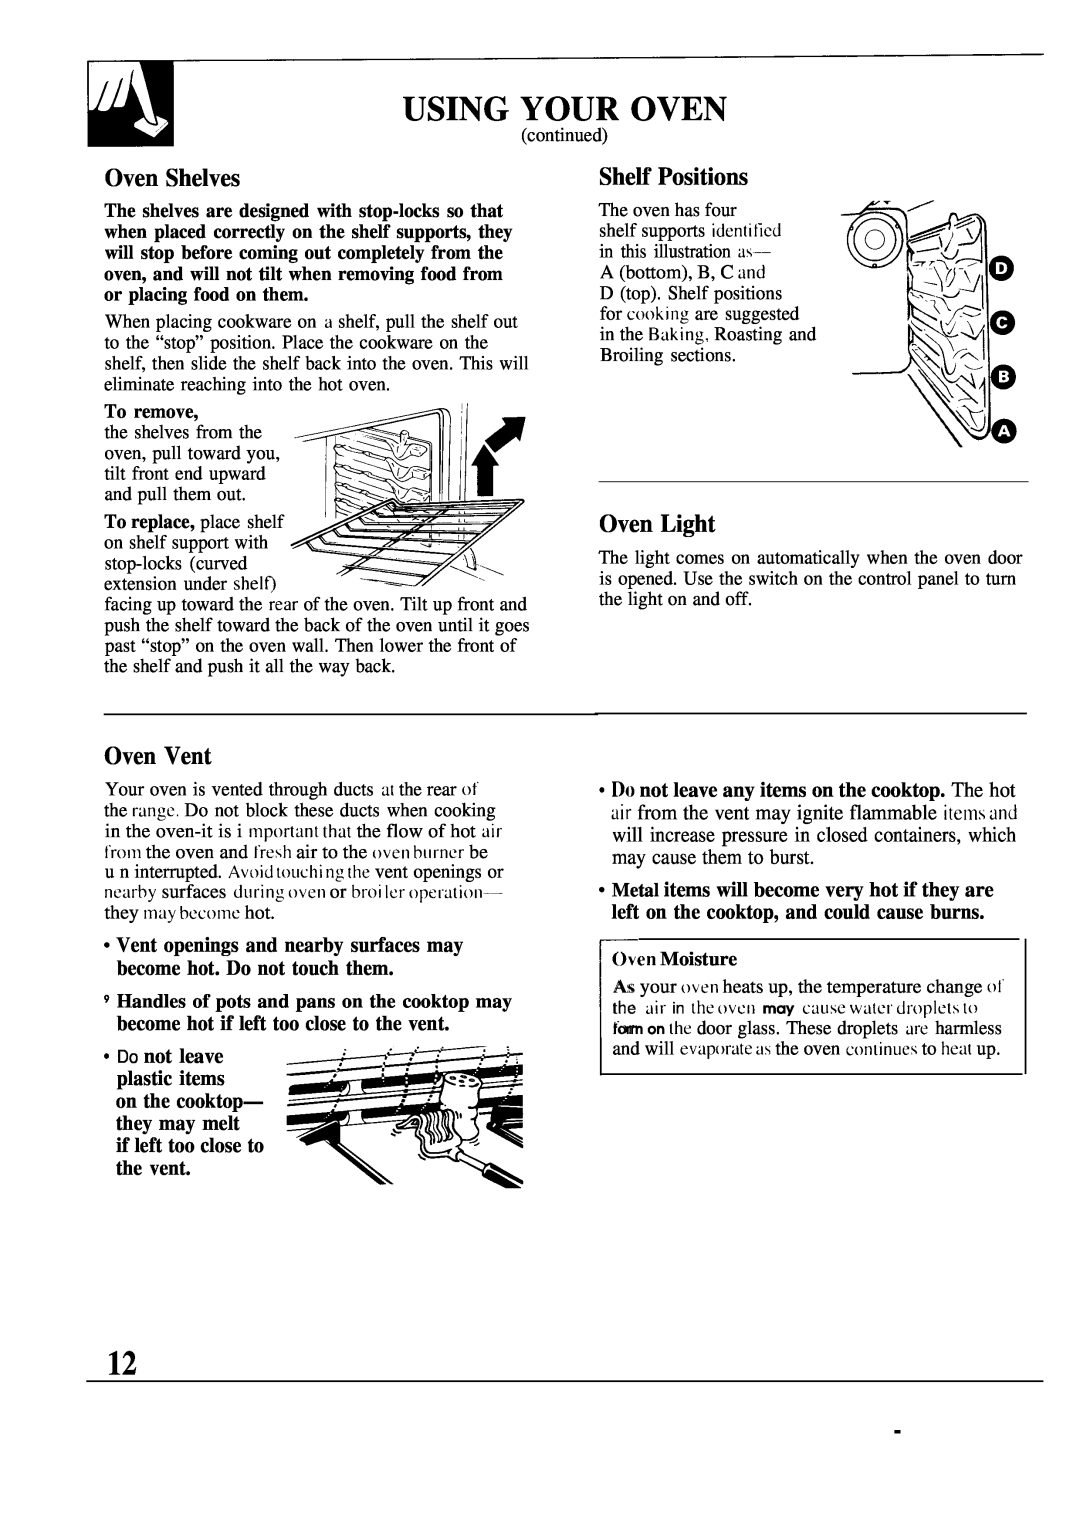 GE JGSP31GER, JGSP40AES, JGSP30GER manual Oven Shelves, Shelf Positions, Oven Light, Oven Vent, Using Your Oven 